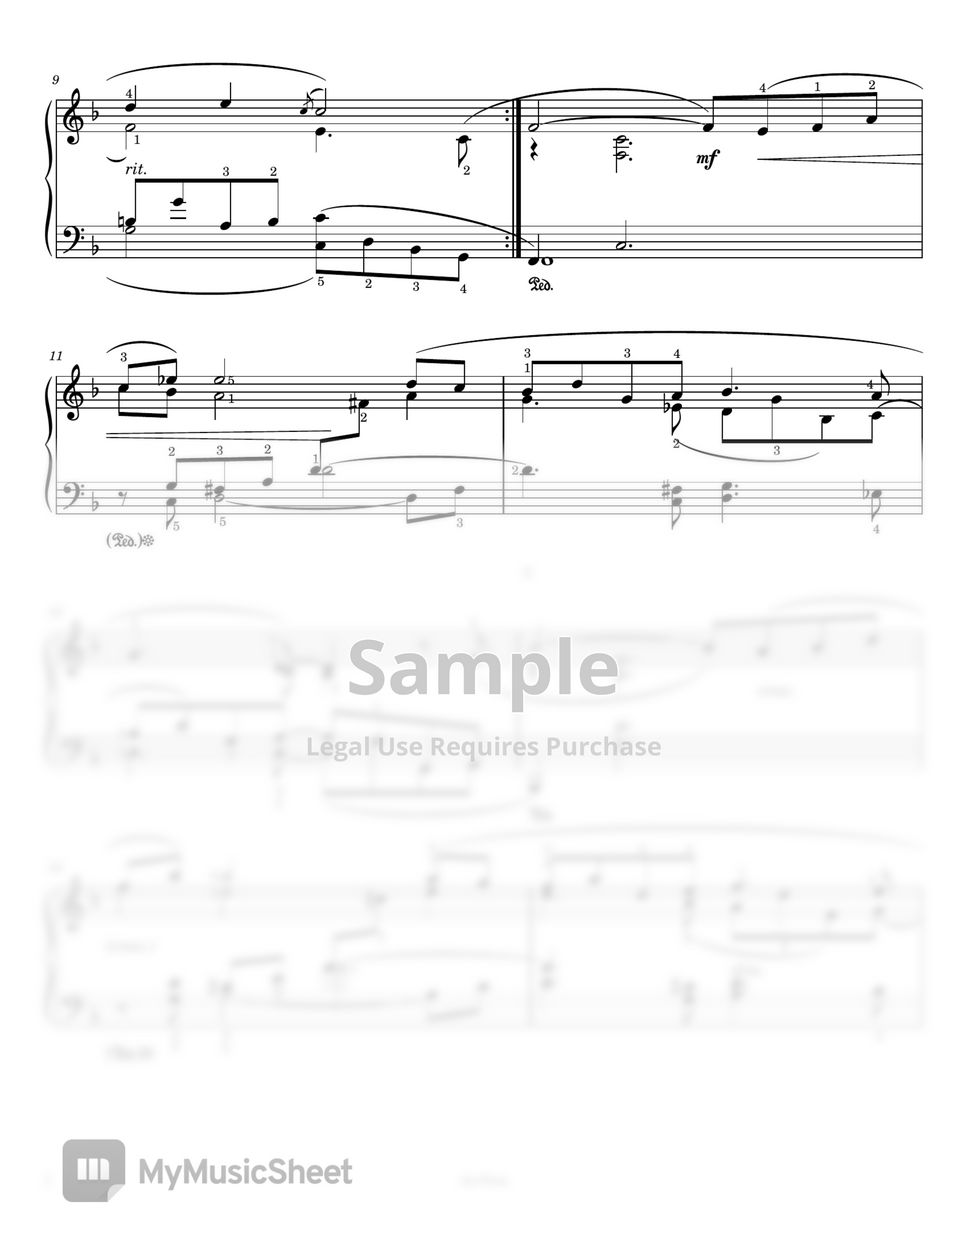 Robert Schumann - Kinderszenen Op.15 No.7 ("Dreaming" ("Träumerei") Original With Fingered) by poon